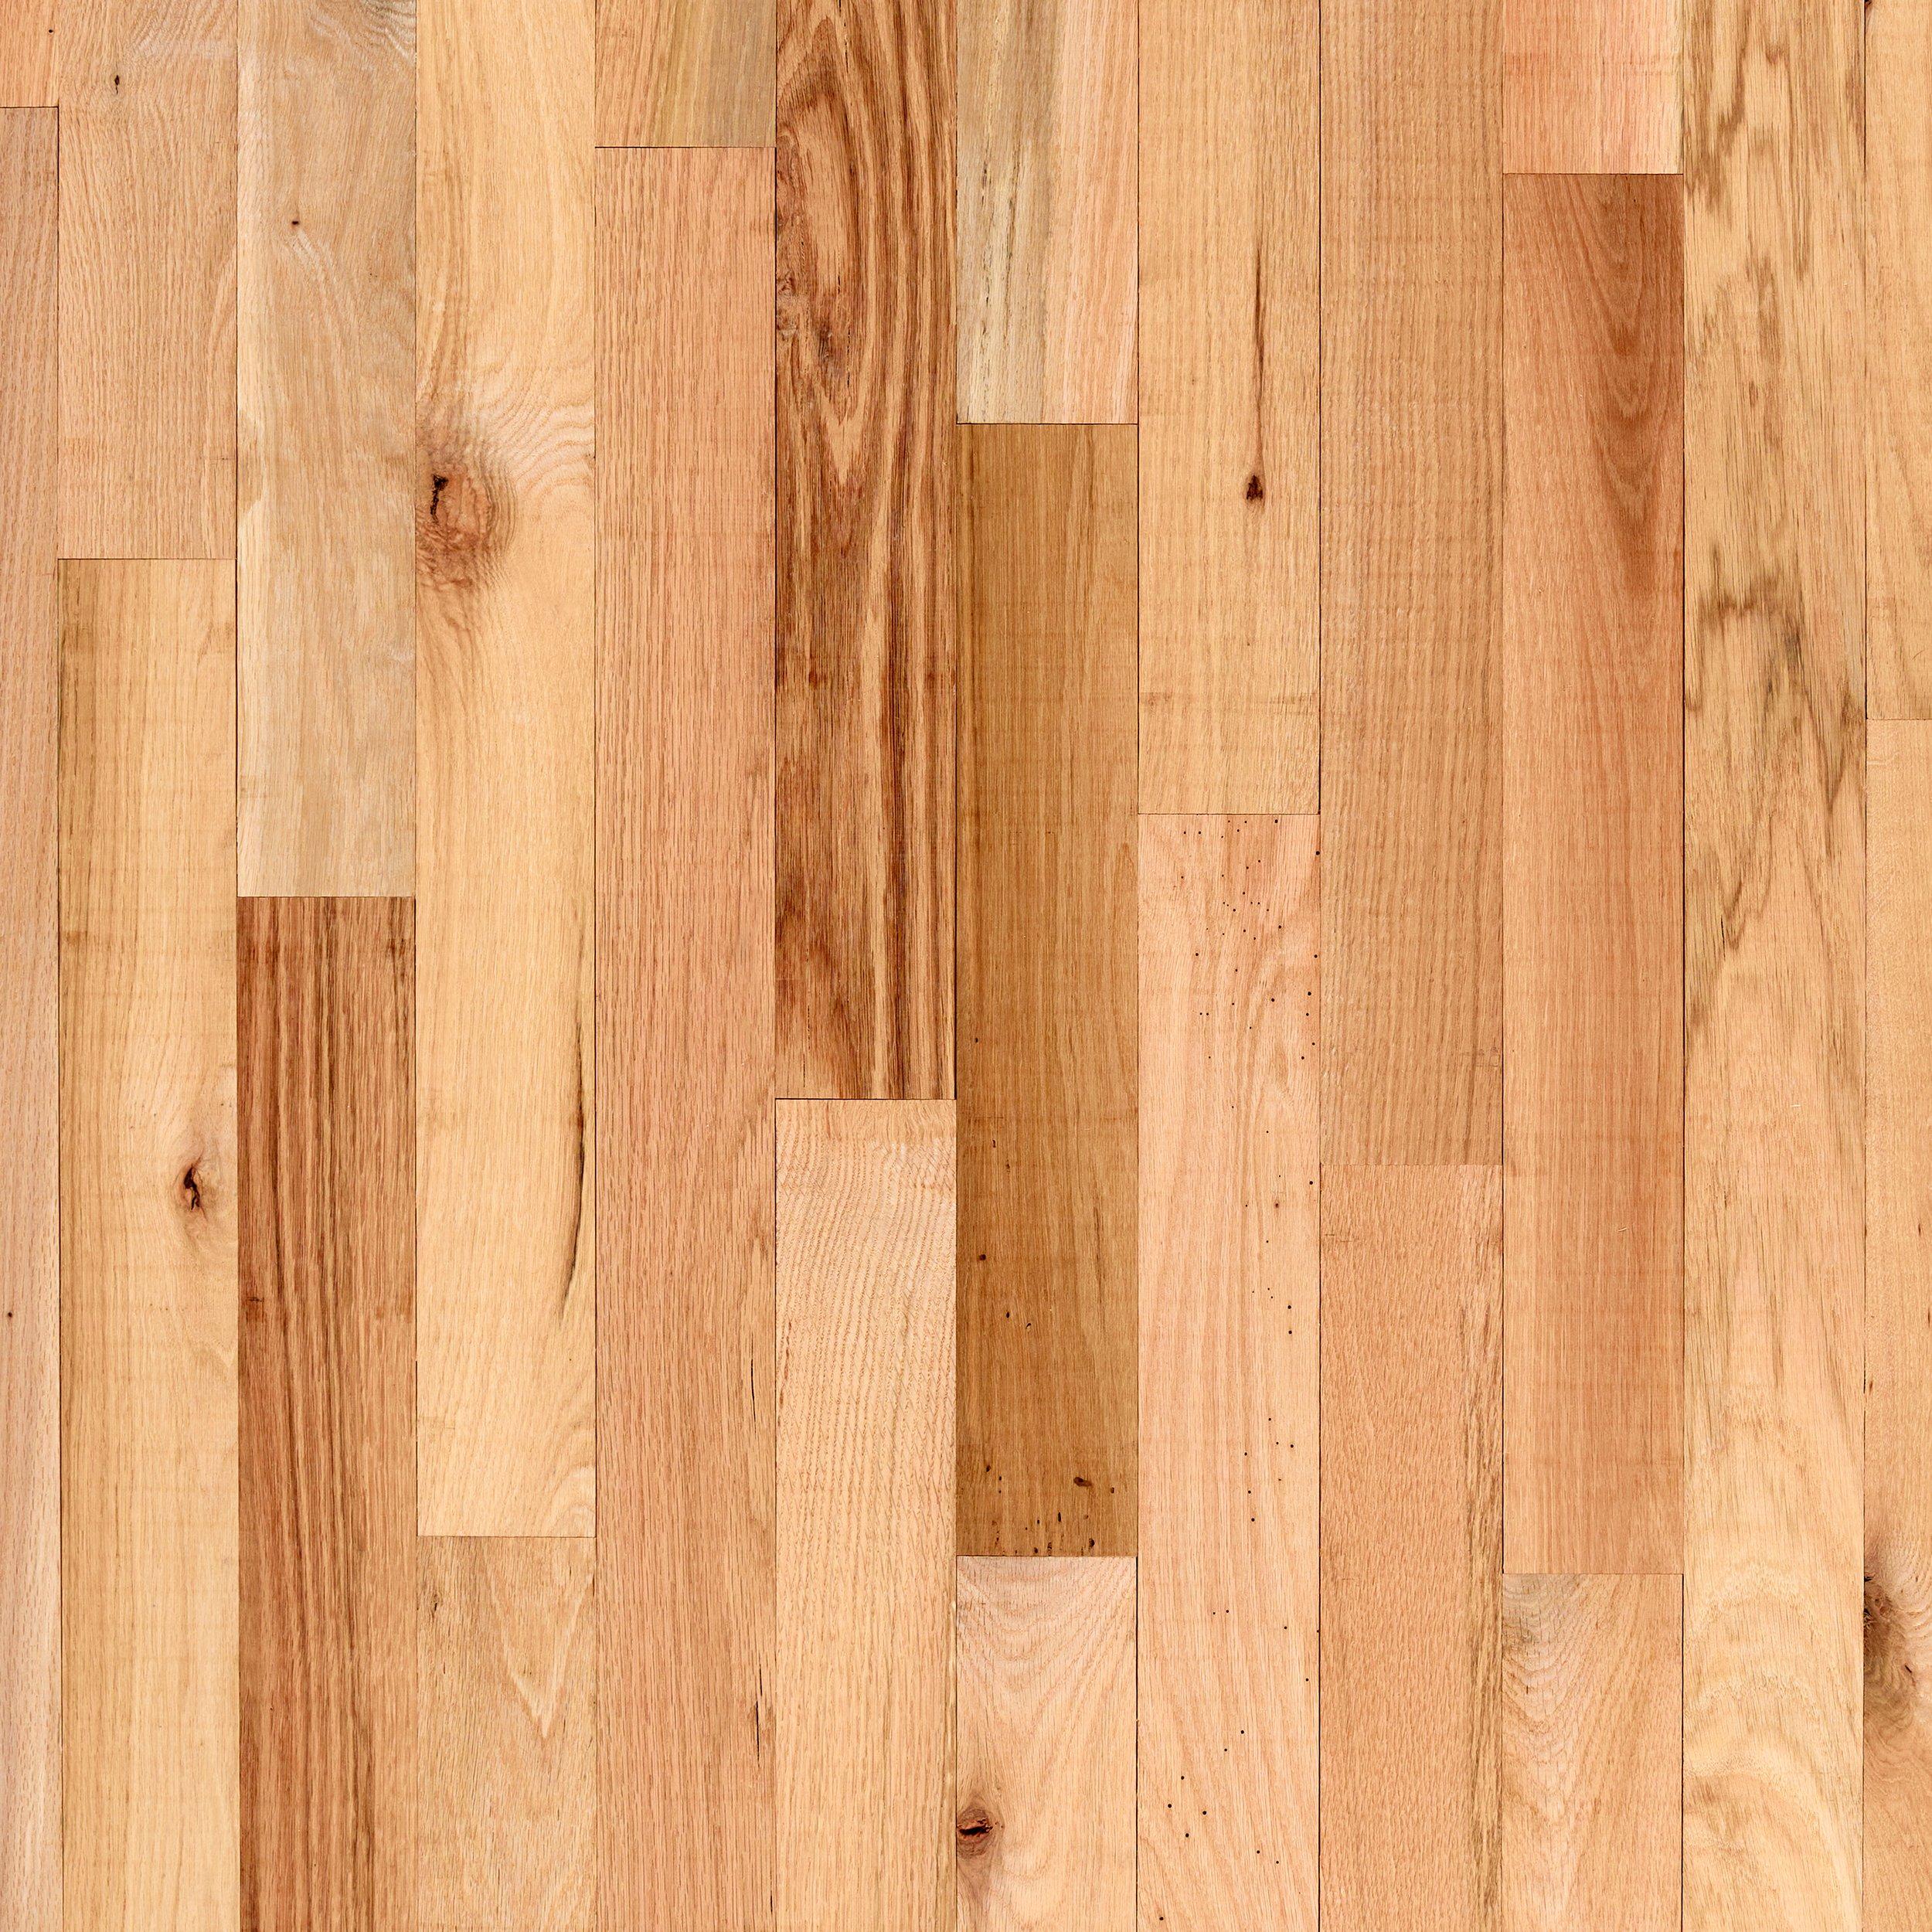 Unfinished Red Oak Solid Hardwood 2 Common Grade